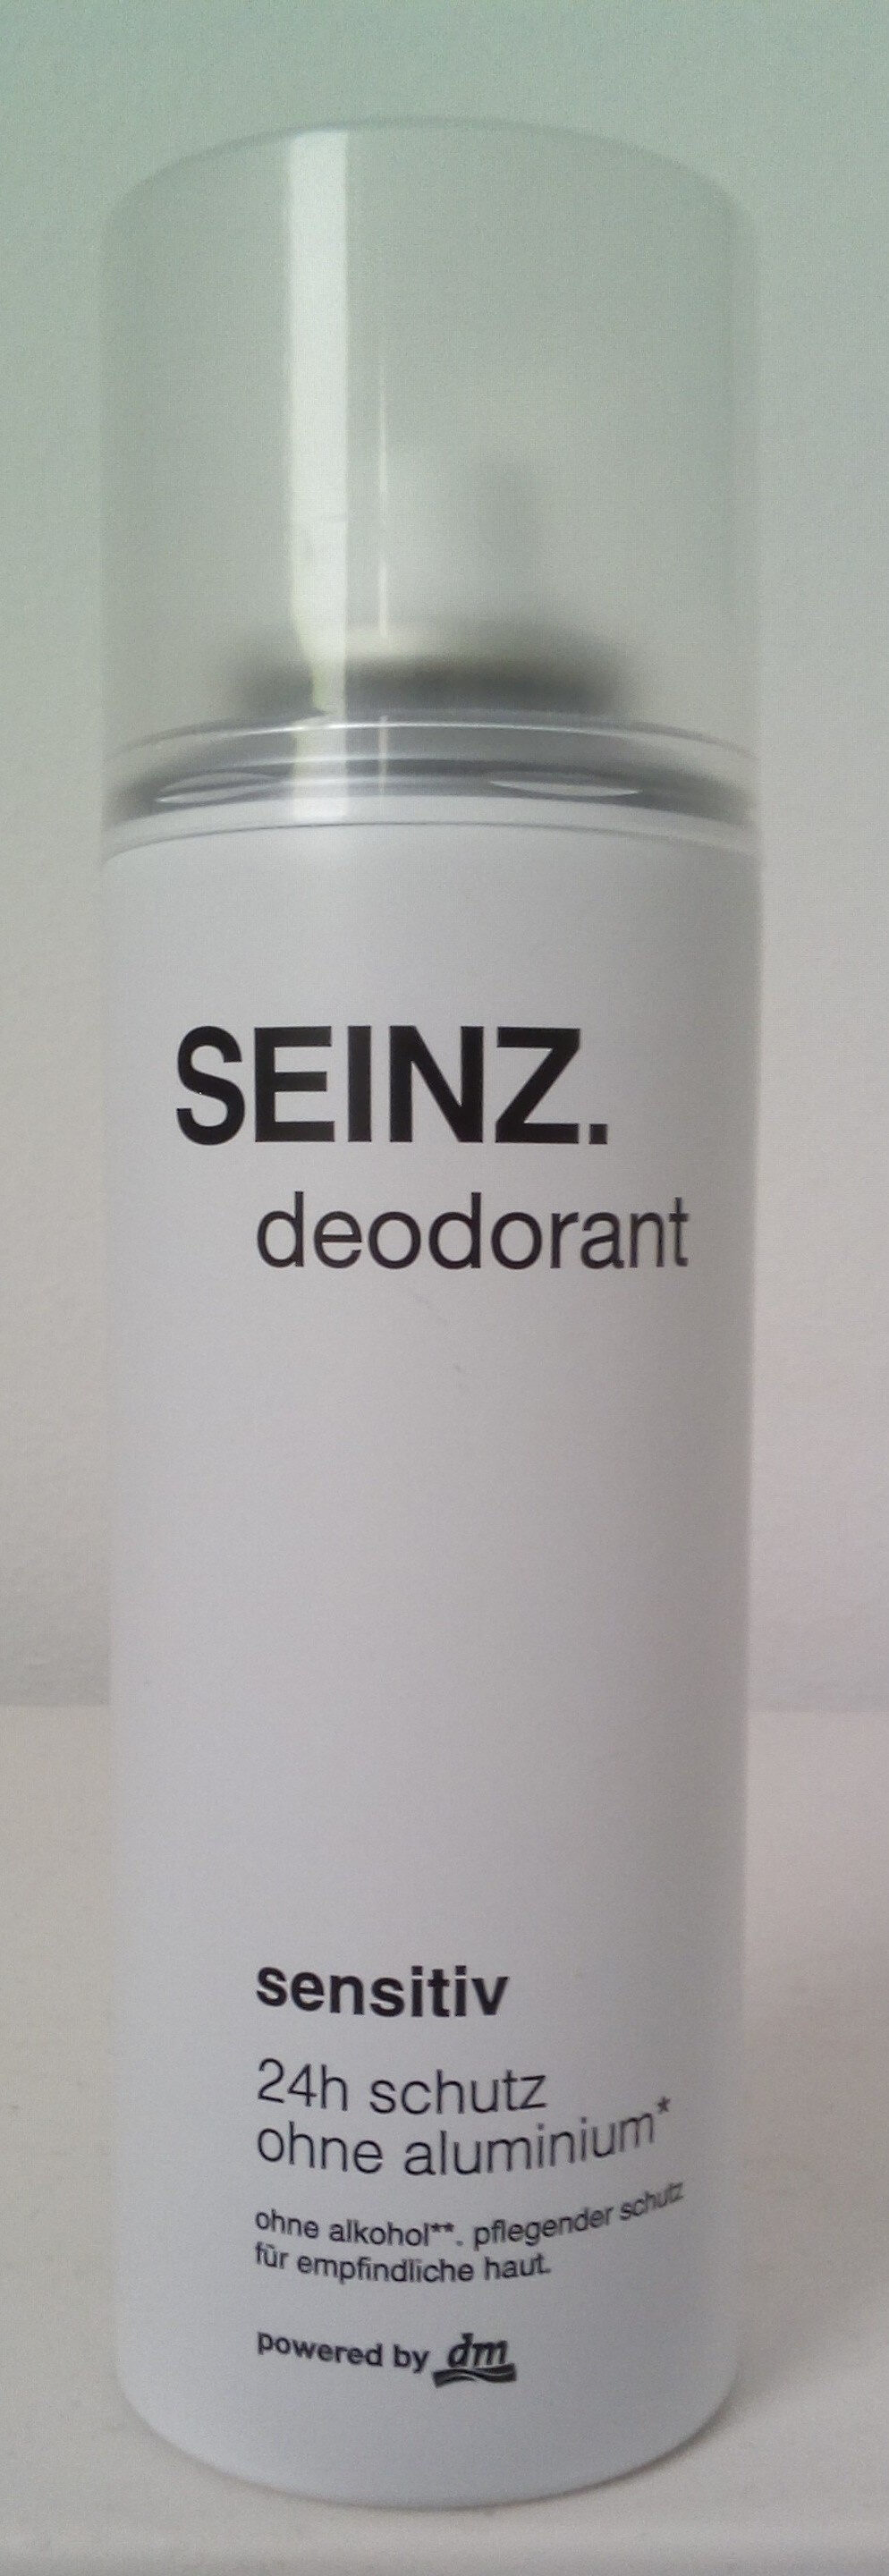 deodorant sensitiv - Tuote - de